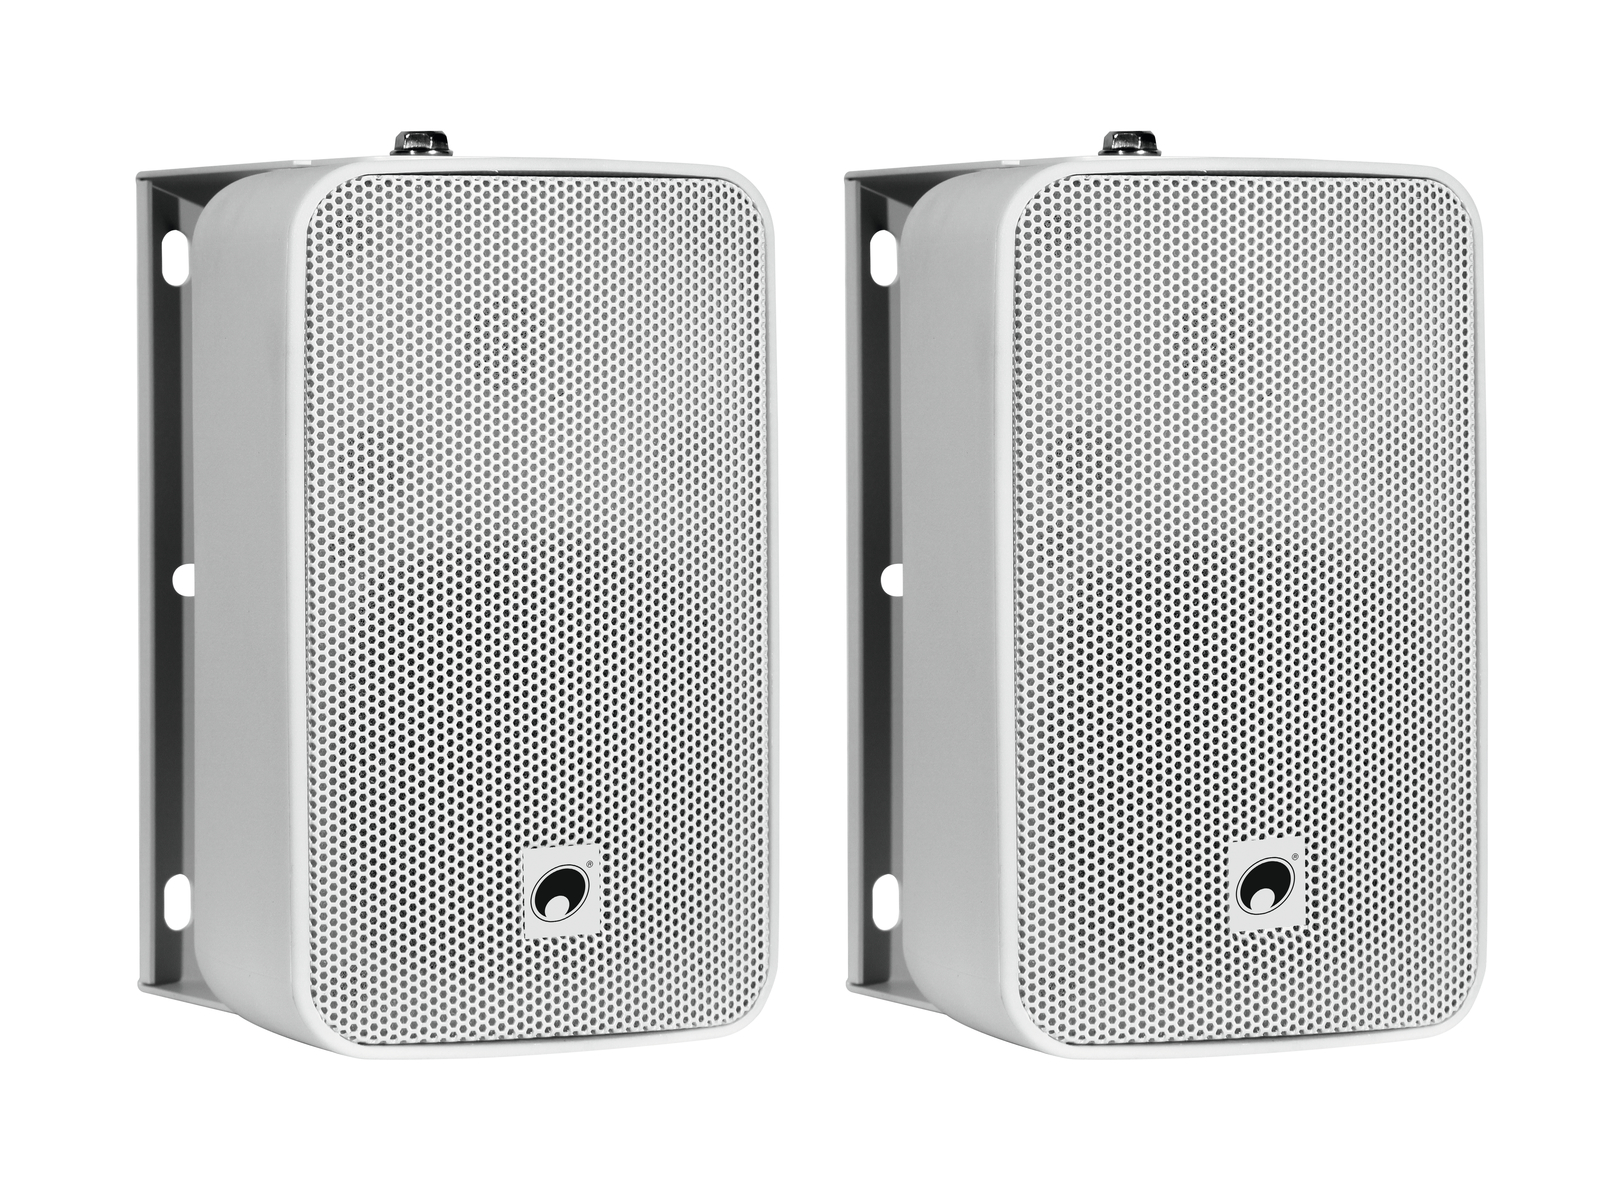 OMNITRONIC ODP-204 Installation Speaker 16 ohms white 2x